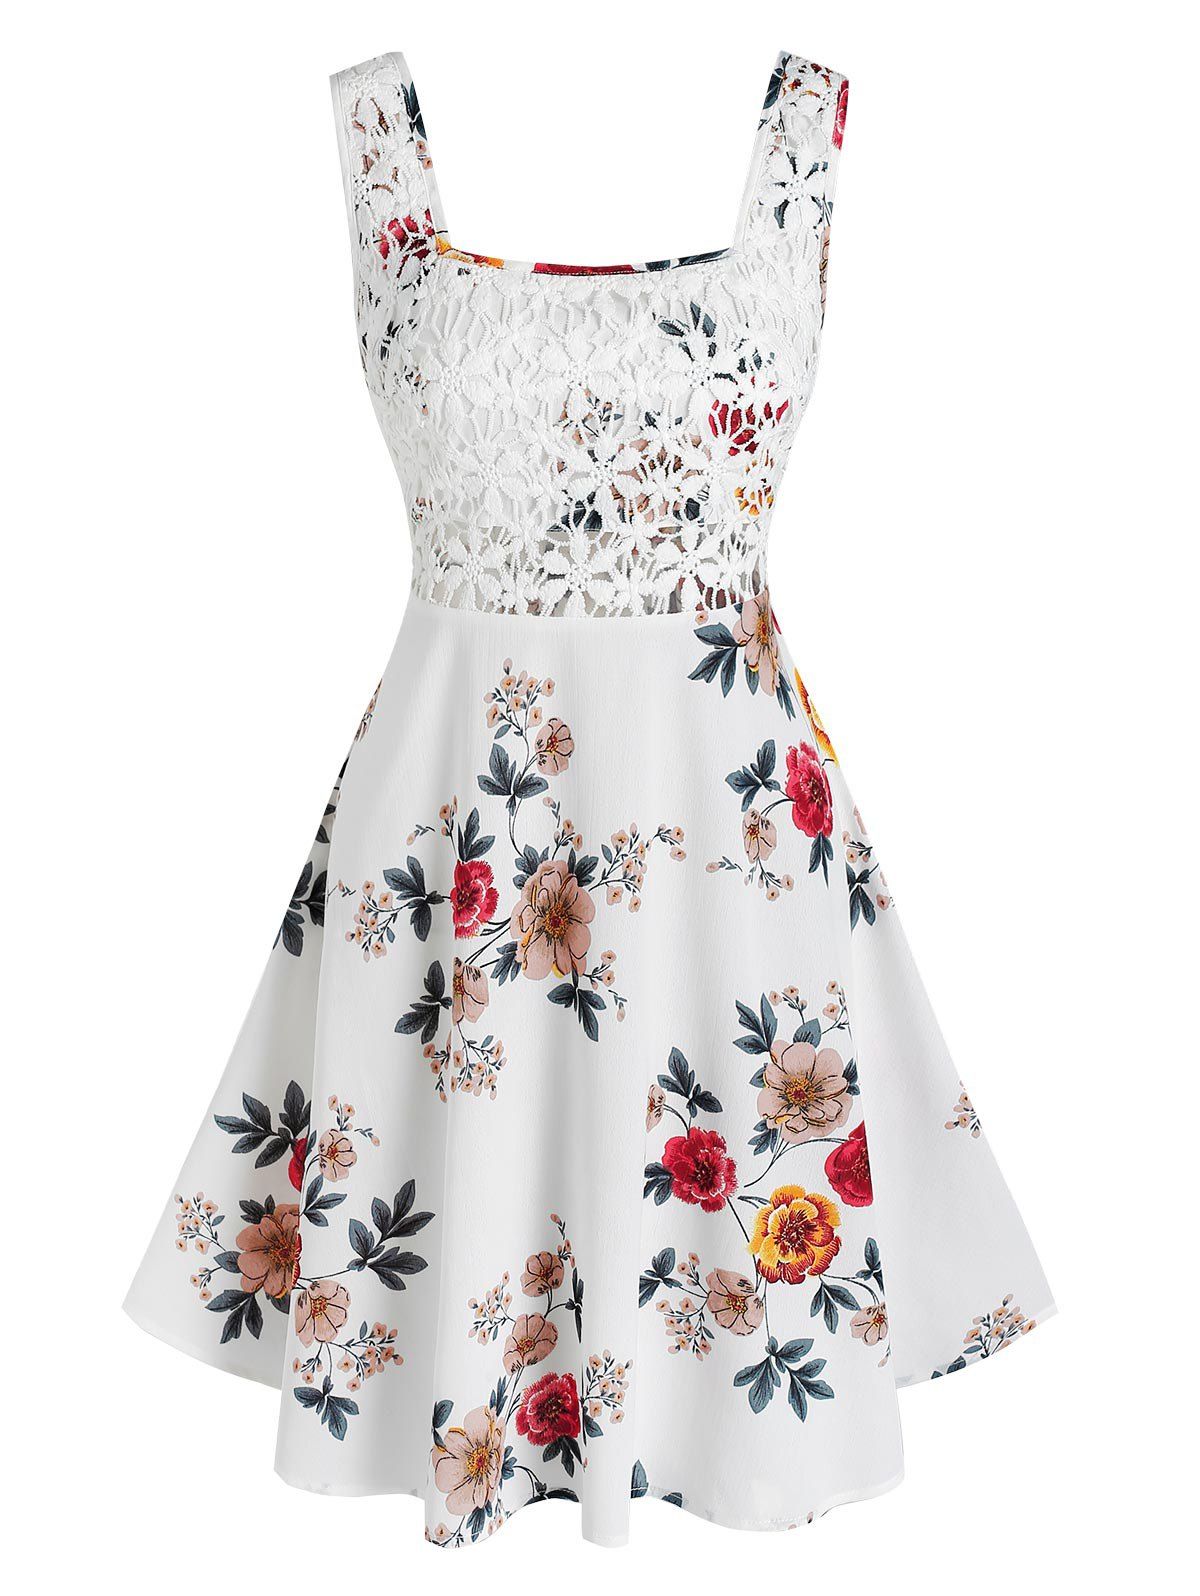 Floral Print Summer Crochet Lace Panel Mini Flare Tank Dress - WHITE L